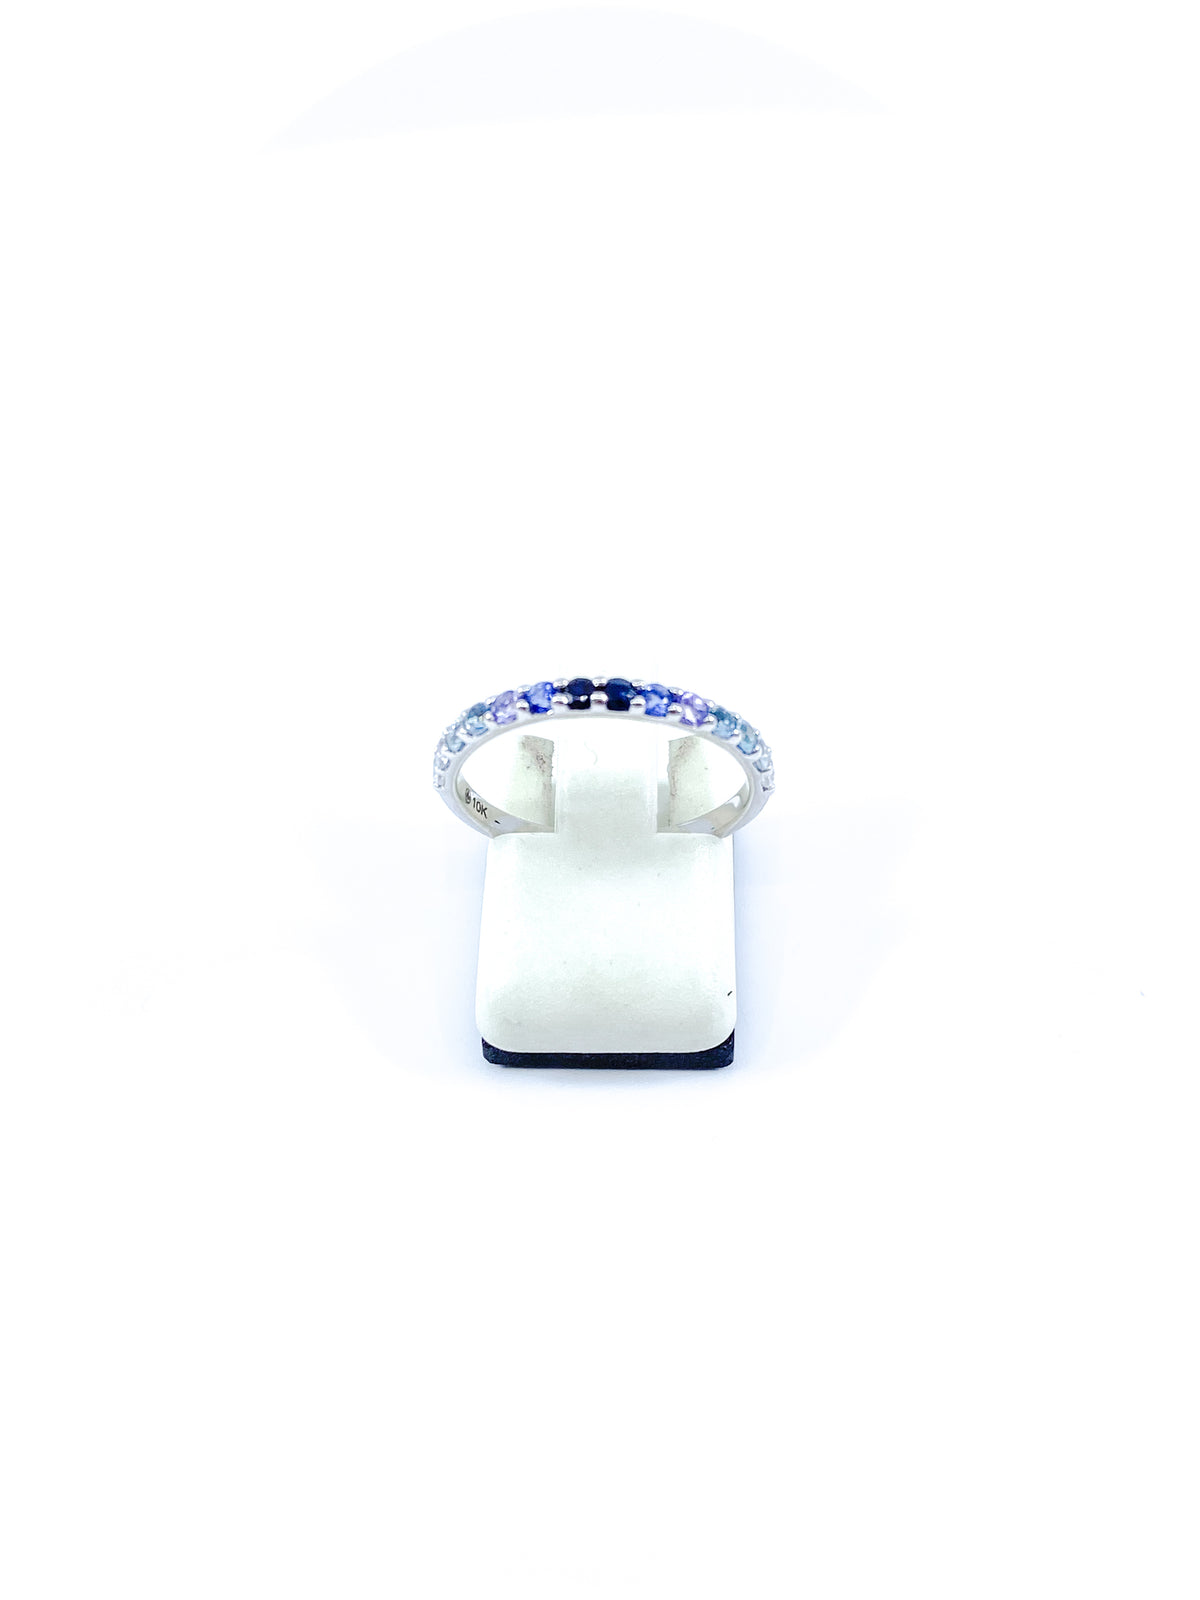 Anillo de oro blanco de 10 quilates con circonita blanca auténtica de 2 mm, aguamarina, circonita azul, topacio azul, tanzanita, zafiro de Ceilán y piedras preciosas de zafiro, tamaño 6,5